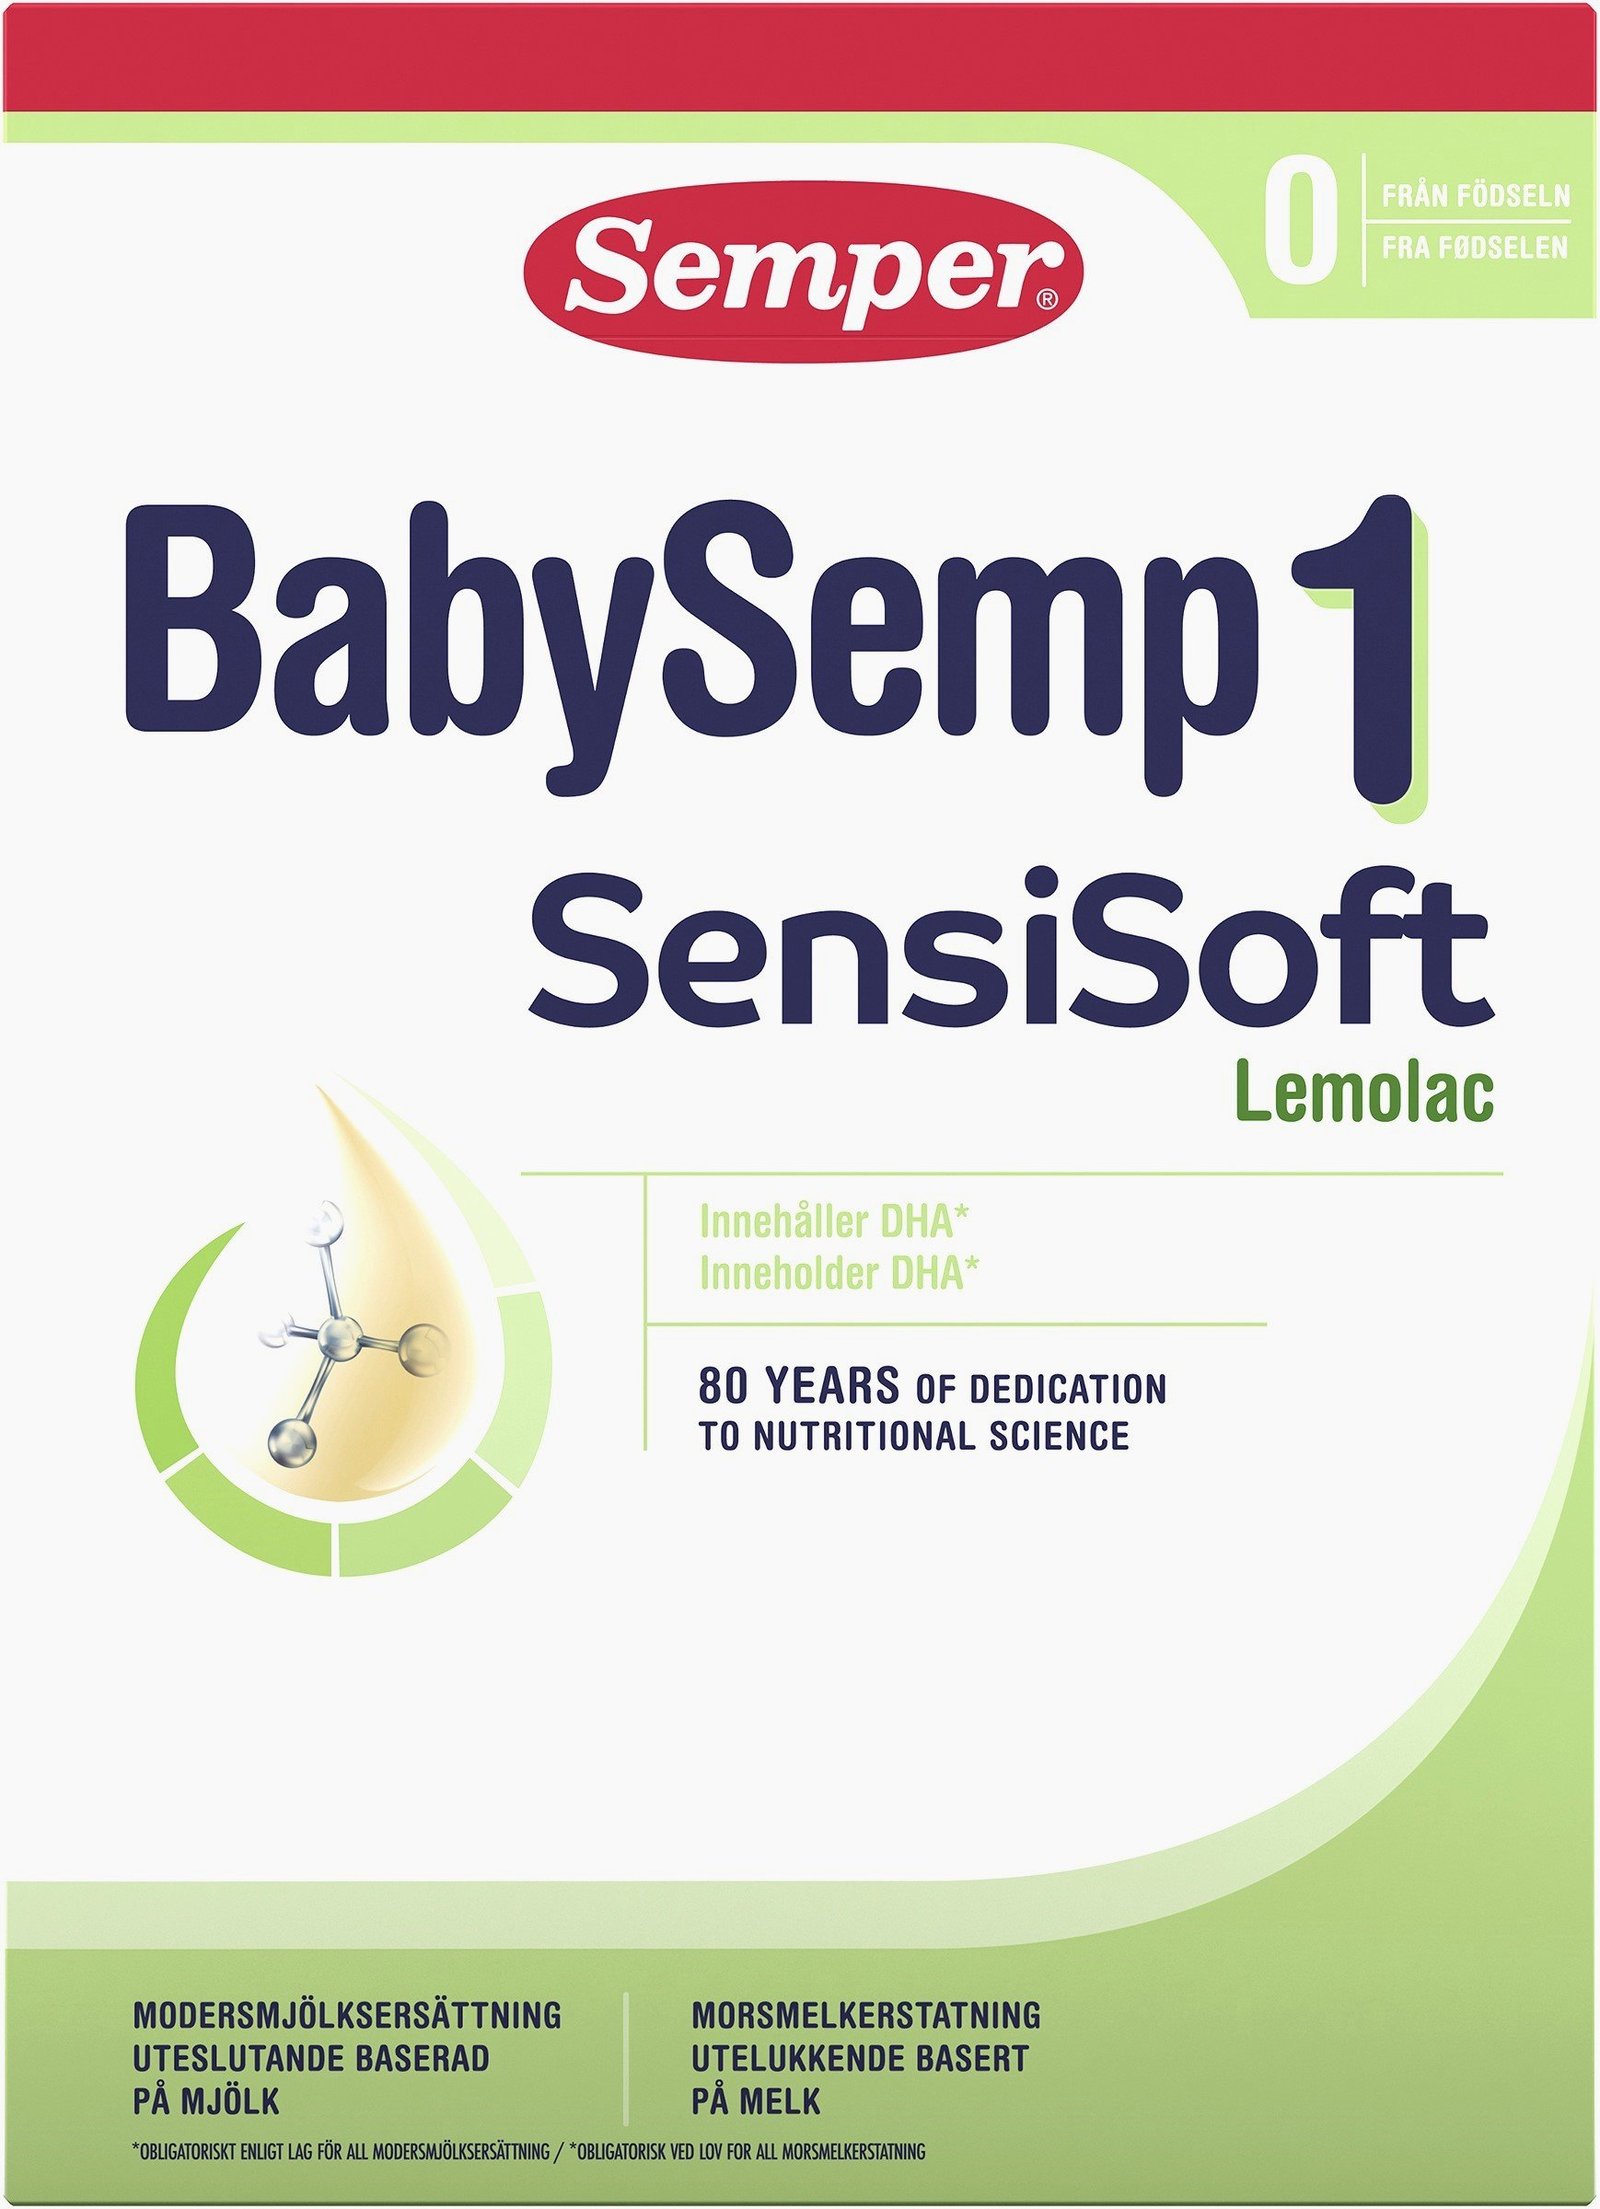 Semper BabySemp 1 SensiSoft Lemolac Modersmjölksersättning 700g